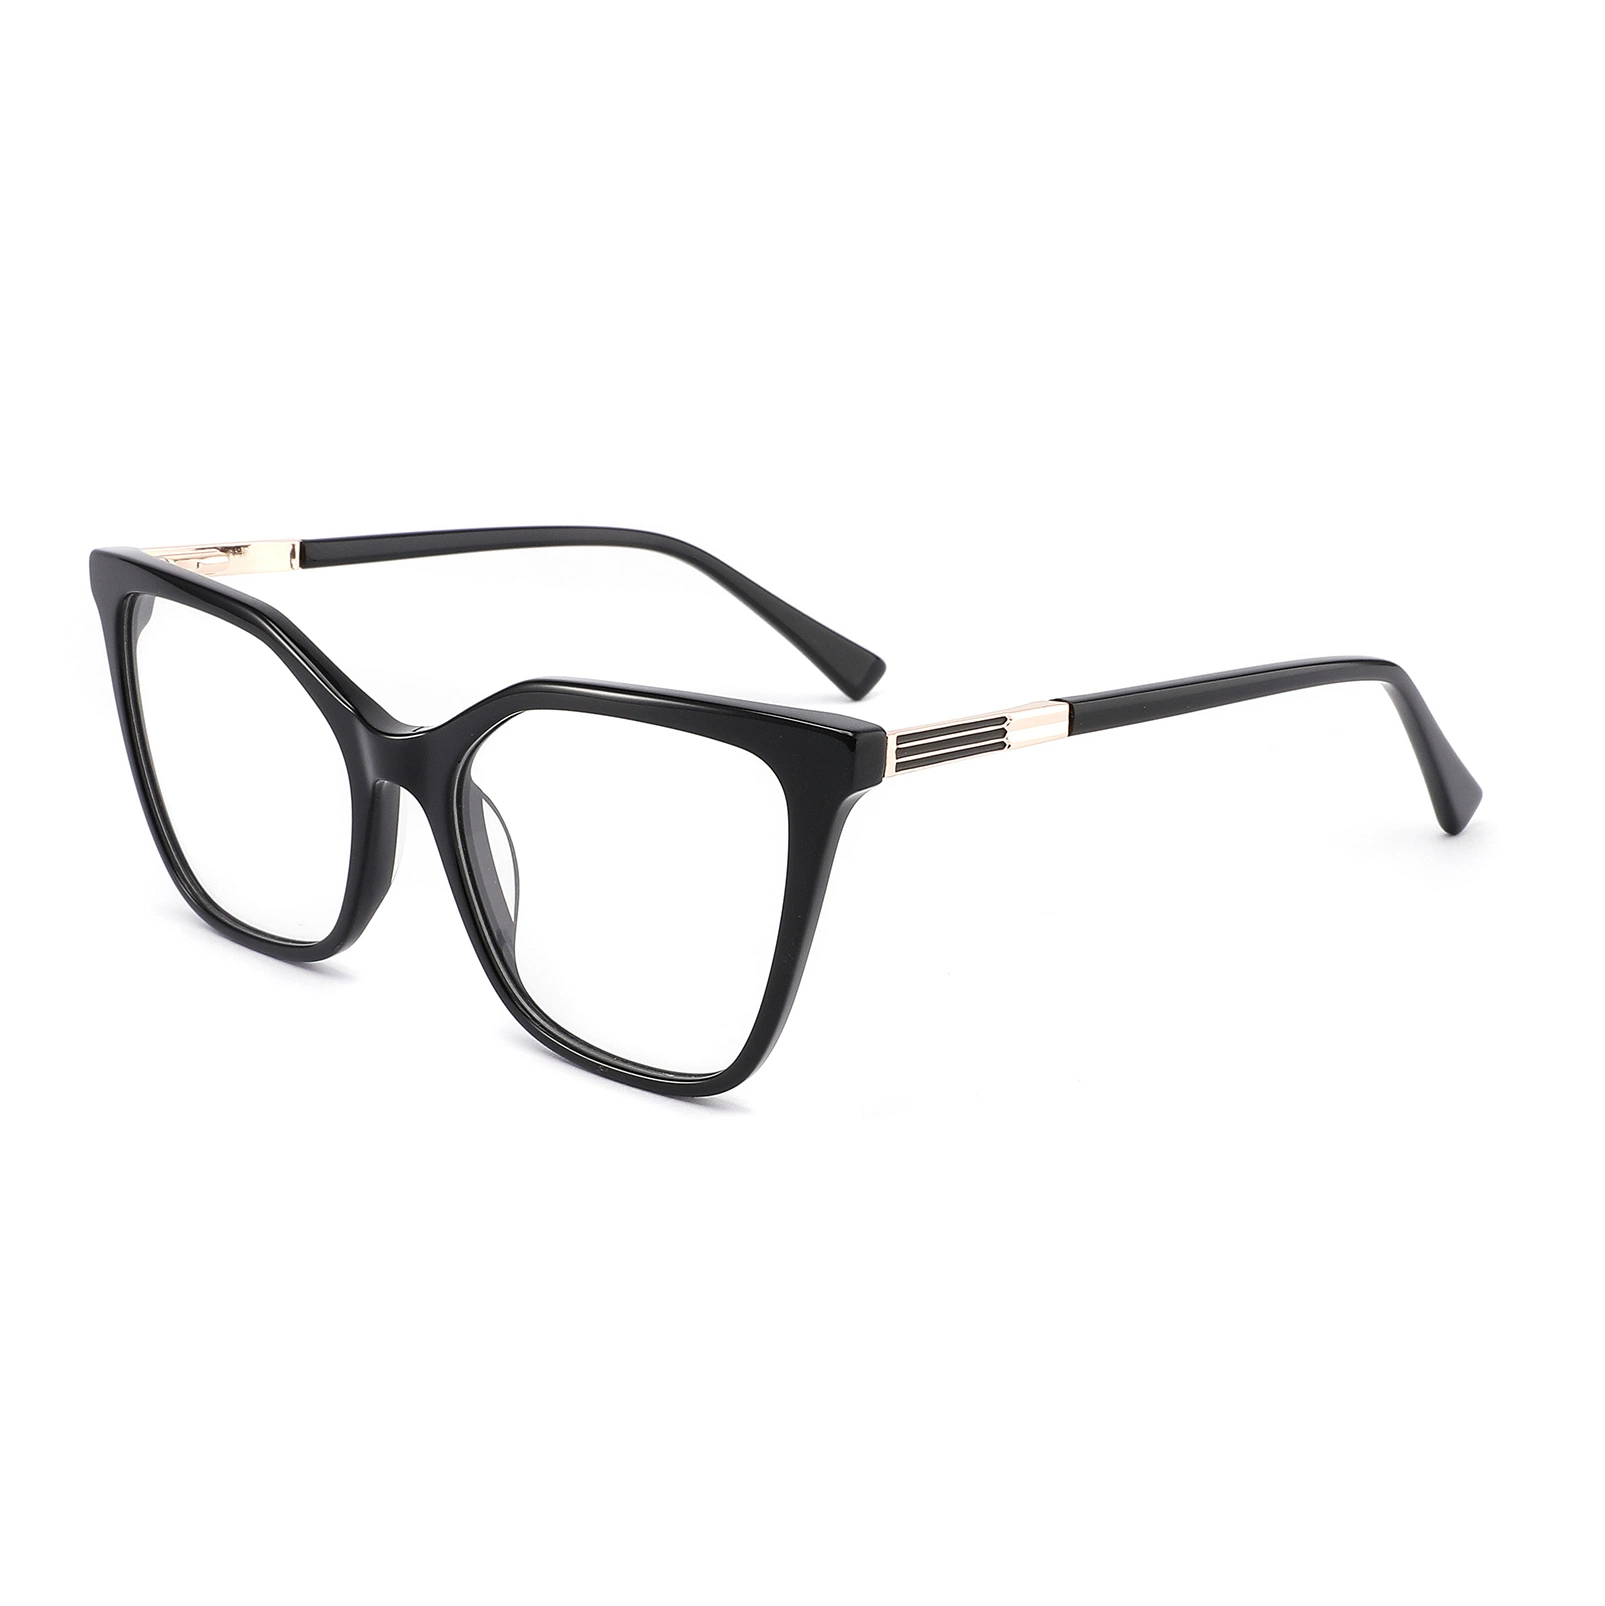 Newest Model Acatate Tortoise Pattern Classical Fashion Retro Eyeglasses Women First Metal Acetate Optical Frames